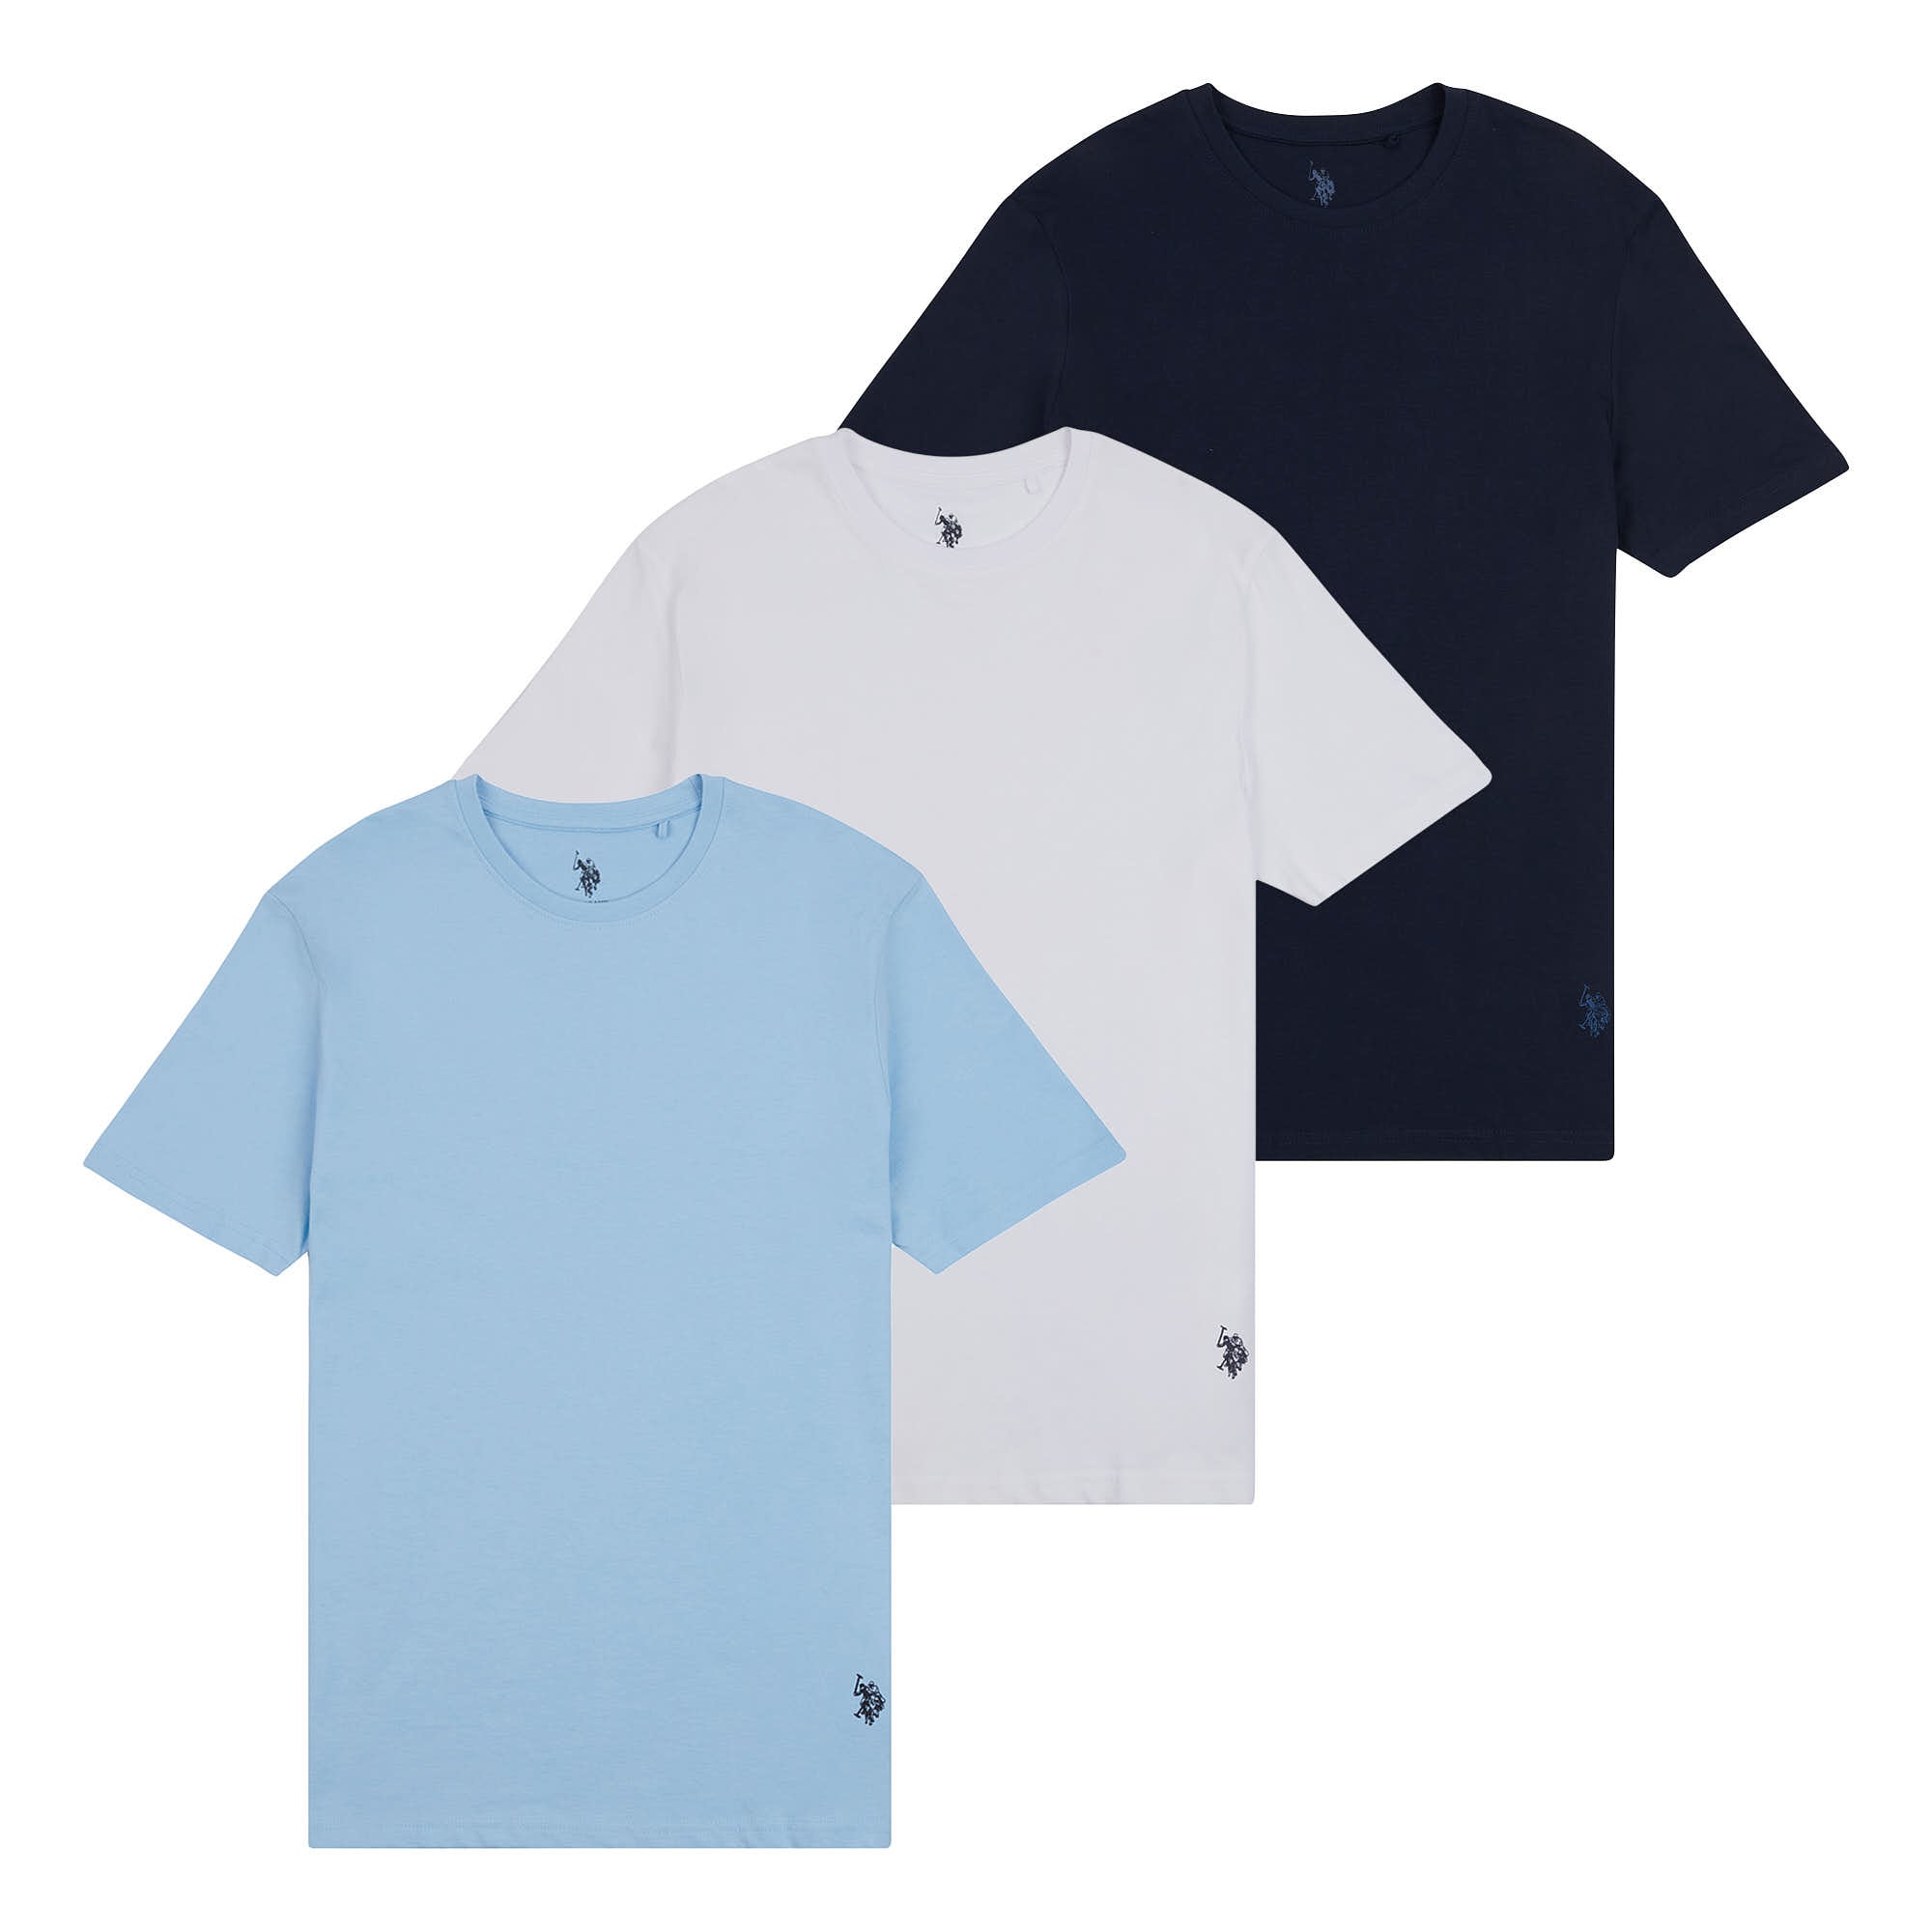 U.S. Polo Assn. Mens 3 Pack T-shirts in Blue Bell – U.S. Polo Assn.